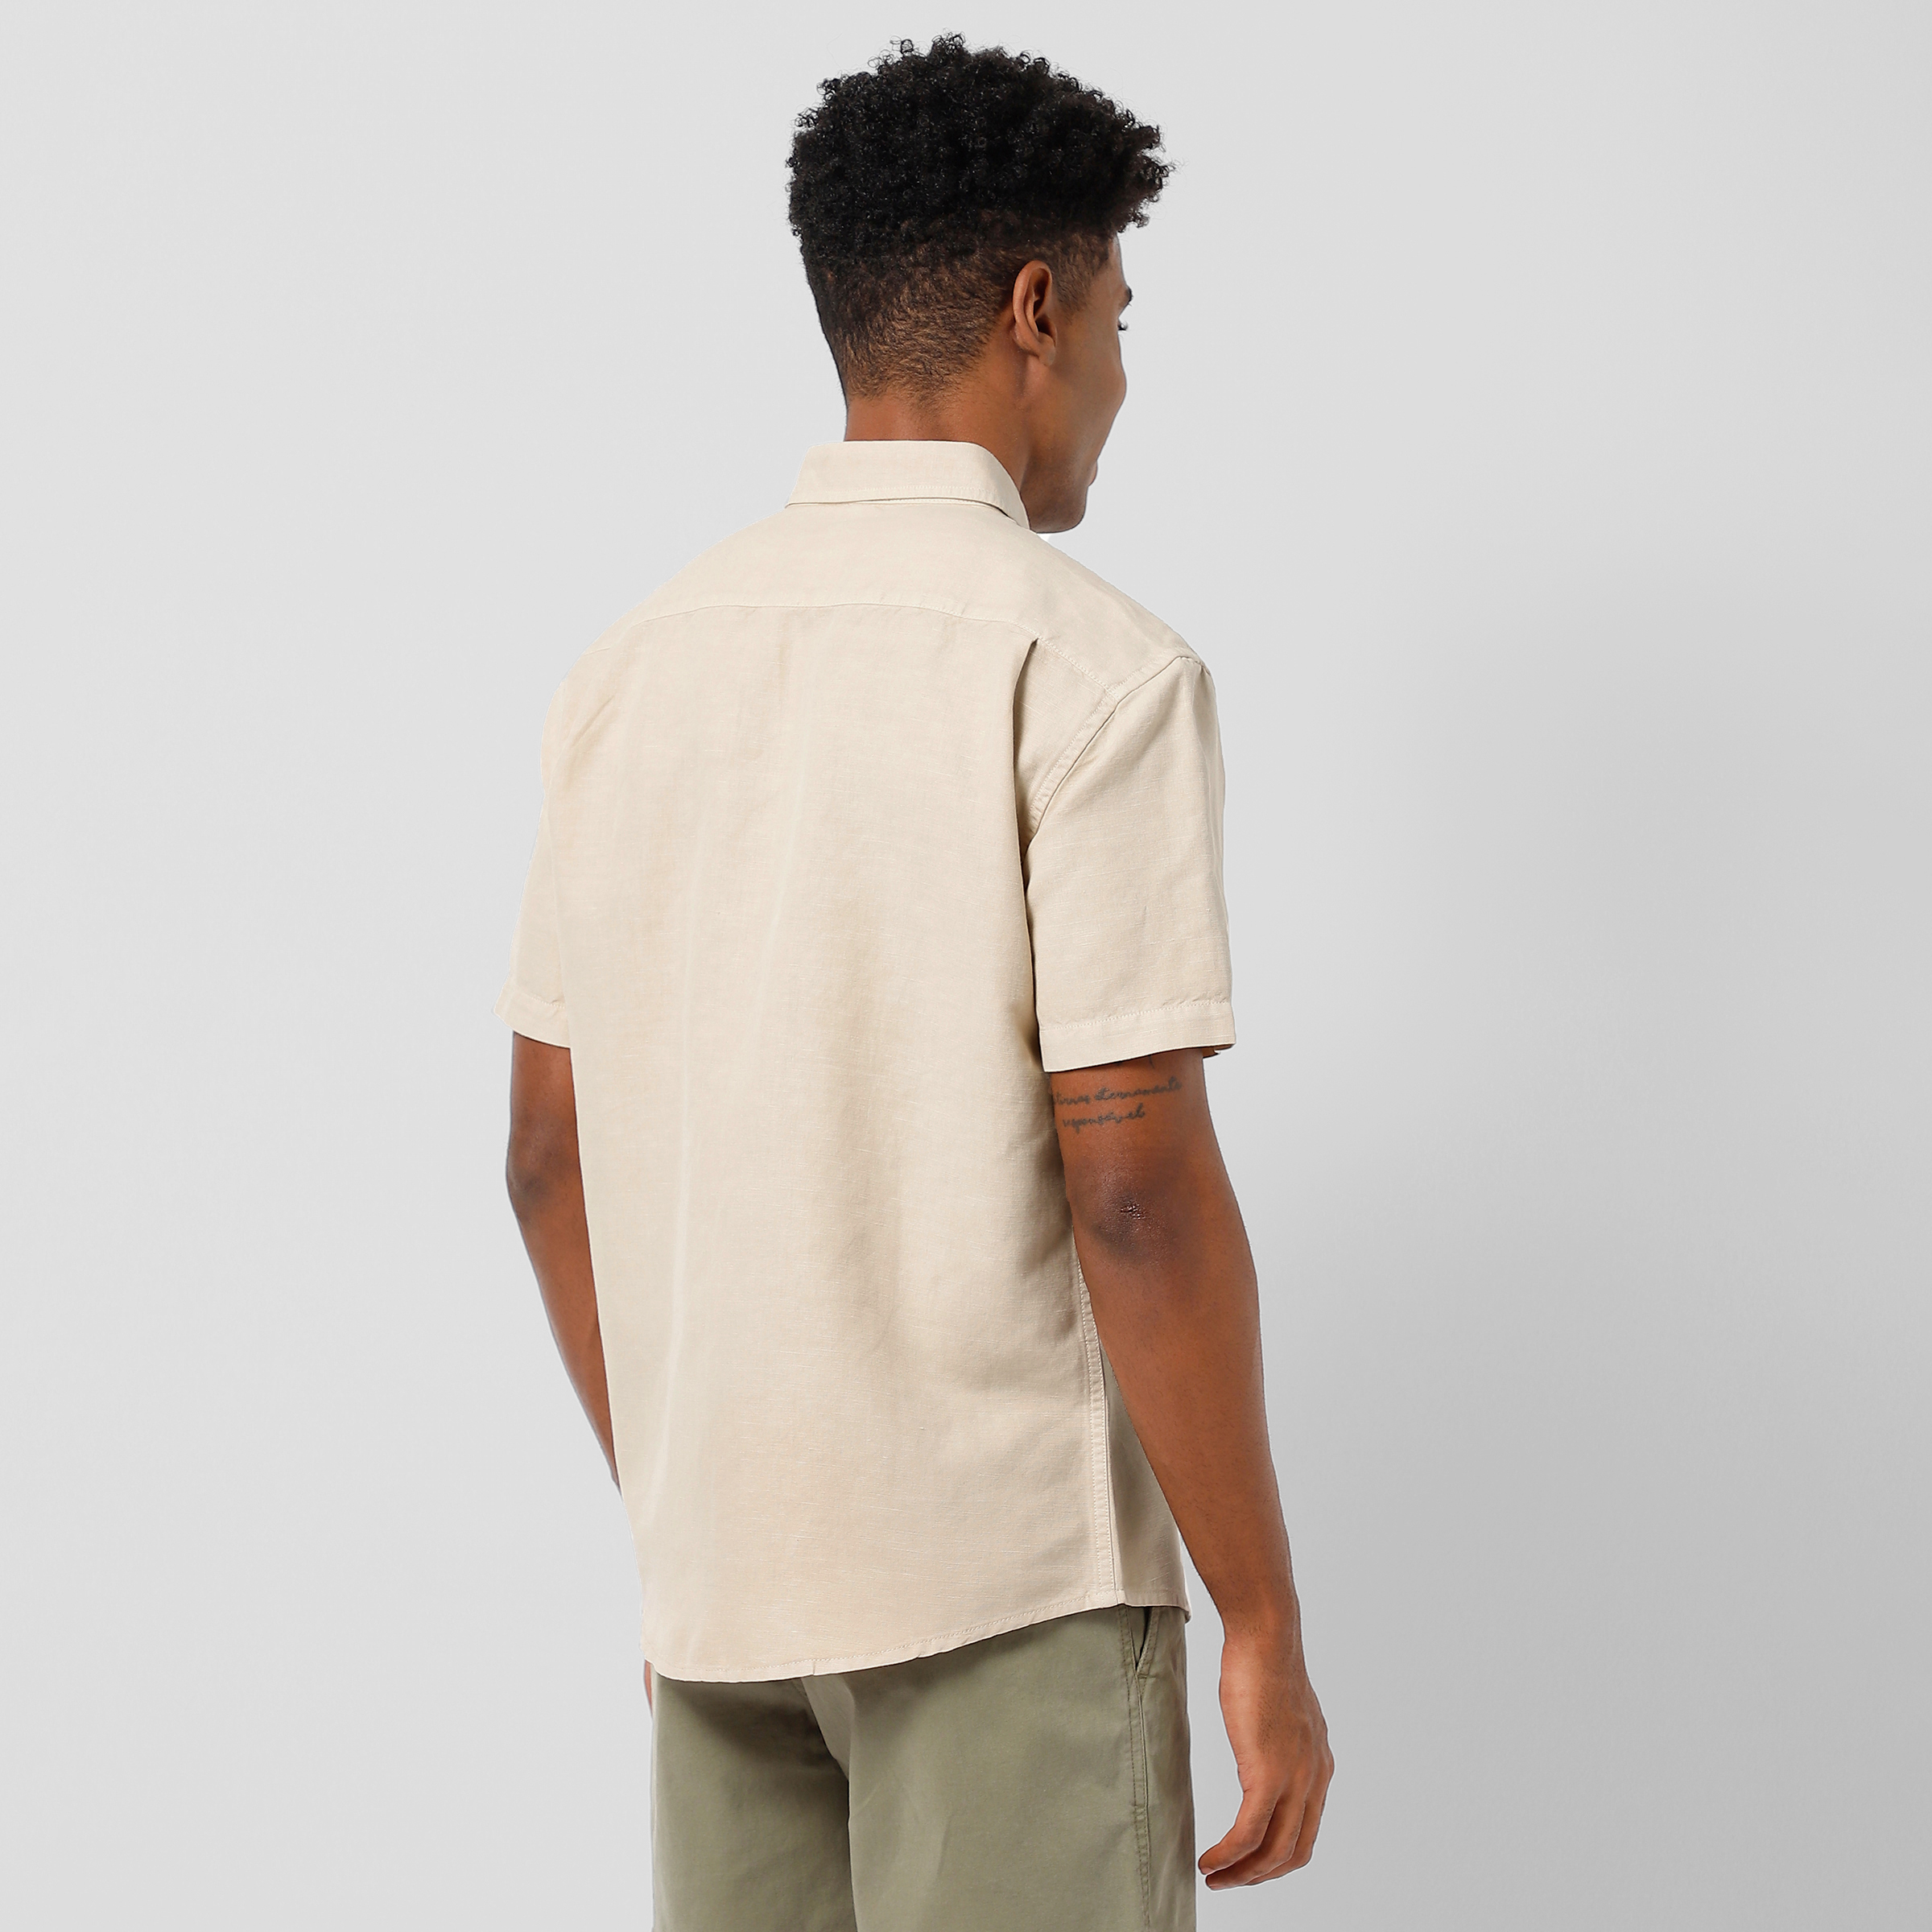 Retreat Linen Shirt Beige back on model